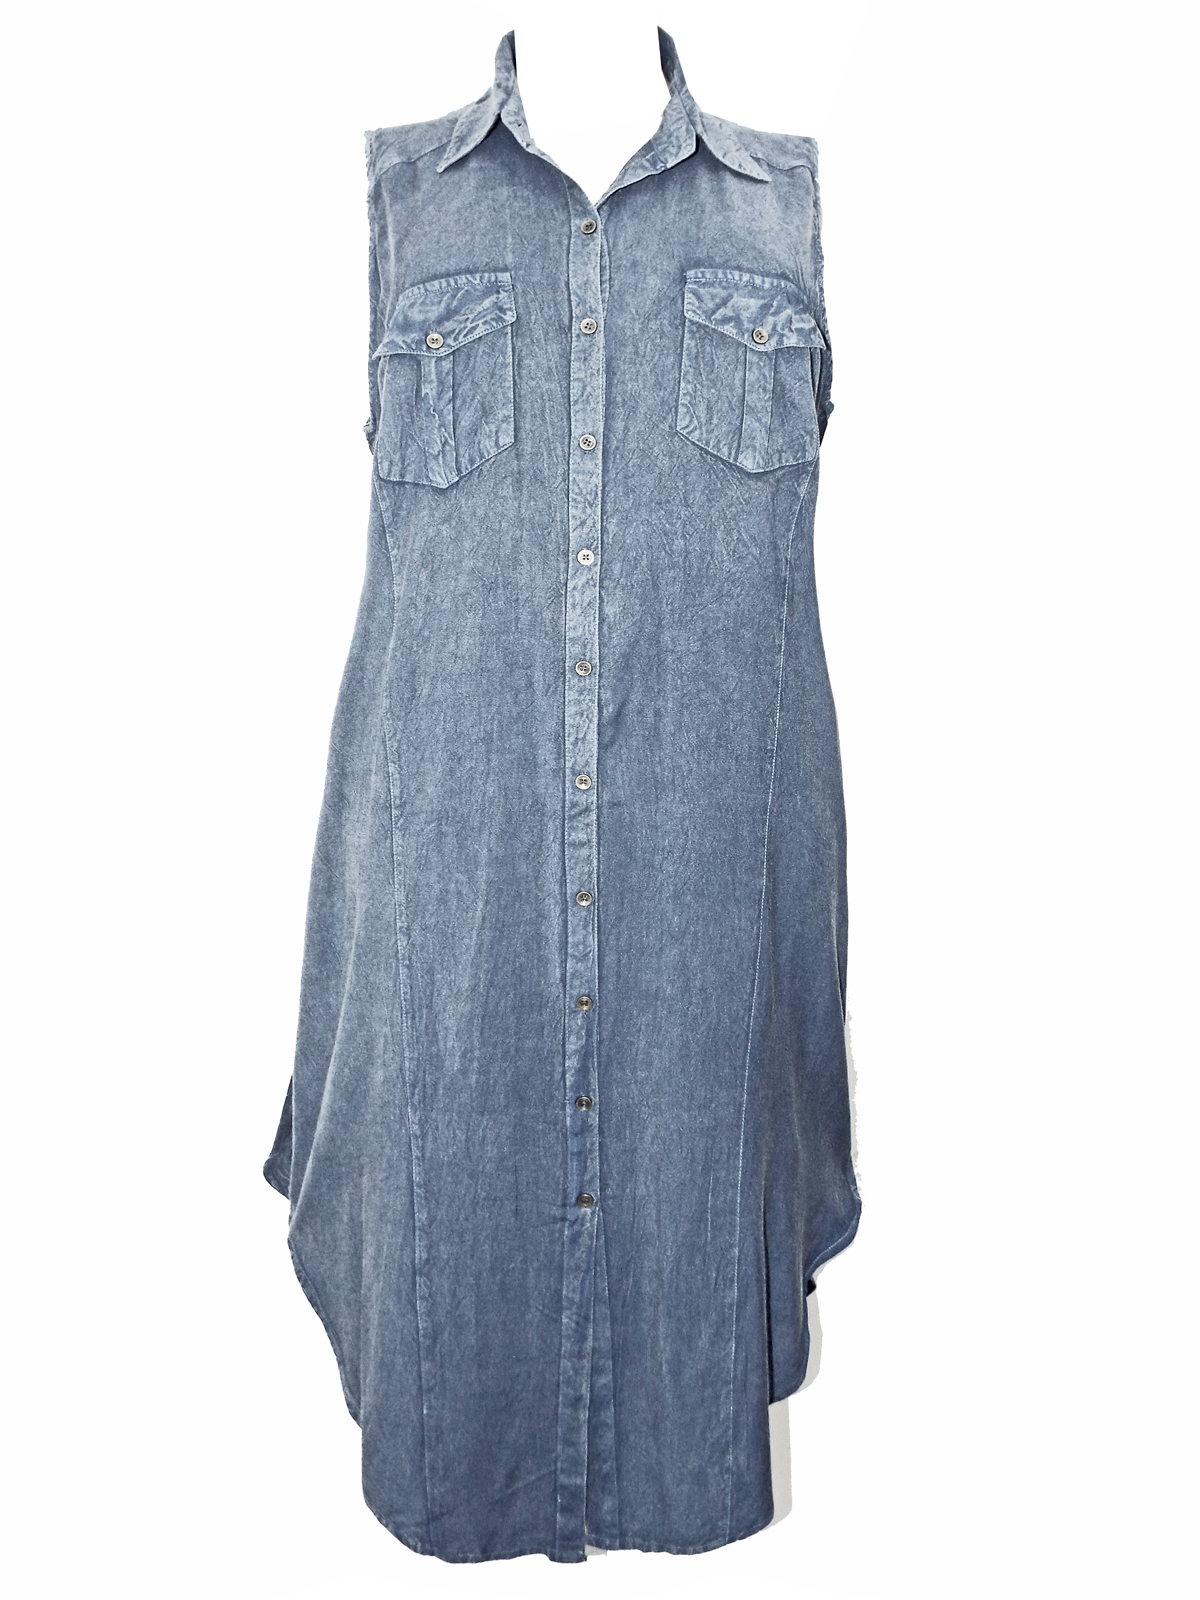 eaonplus DARK-GREY Sleeveless Collared Shirt Dress - Plus Size 18/20 to ...